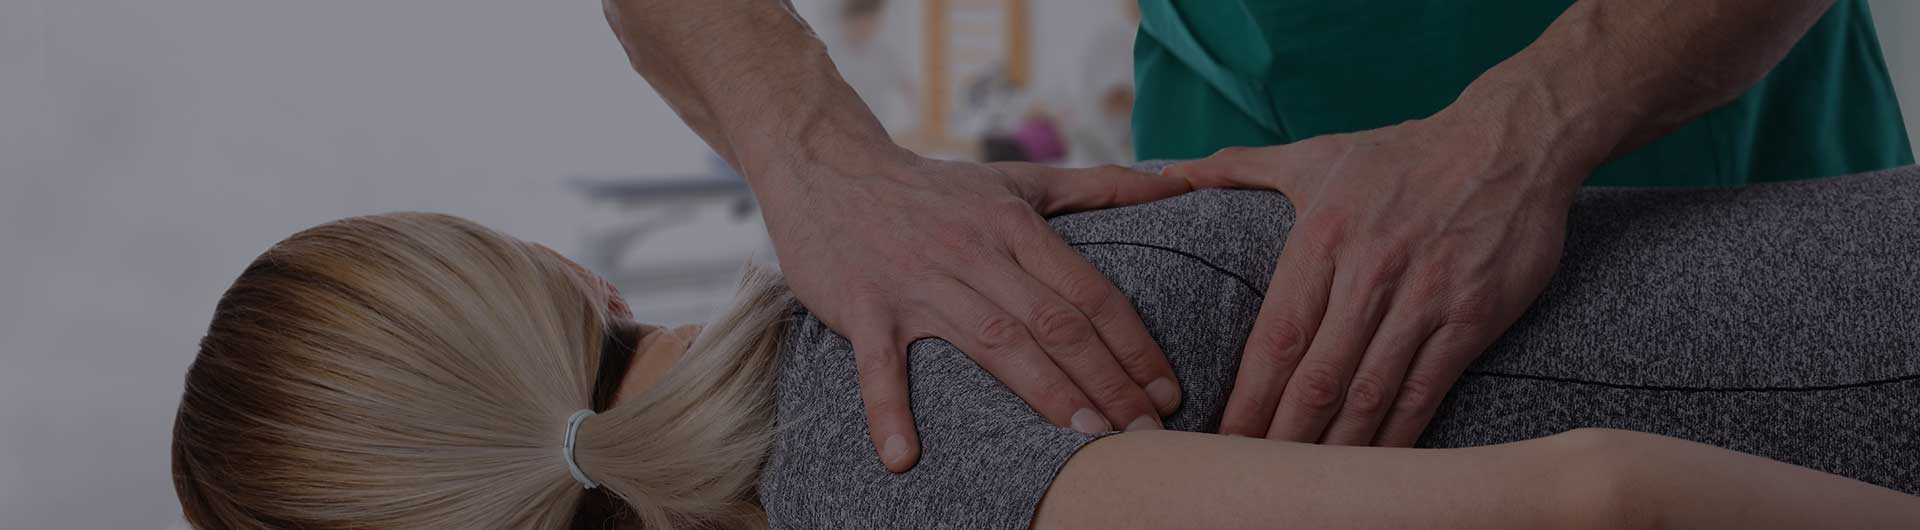 Woman having chiropractic back adjustment.